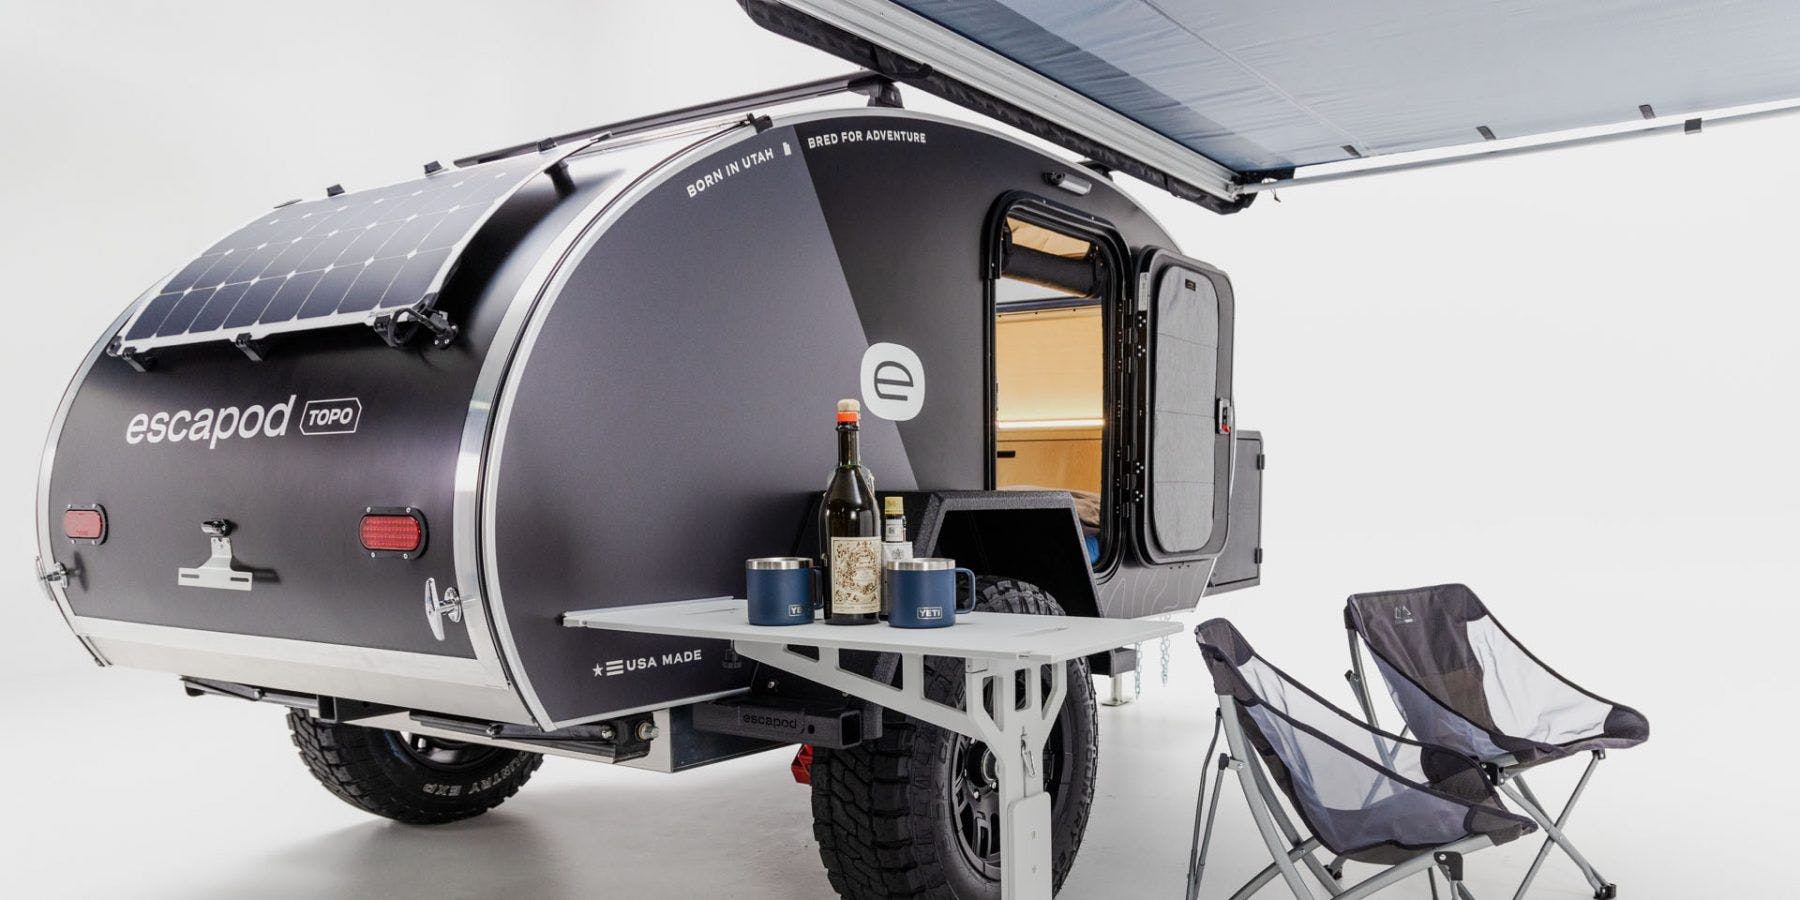 An Escapod Original TOPO teardrop camper in a studio against a white backdrop. A solar panel and spare tire accent the trailer.